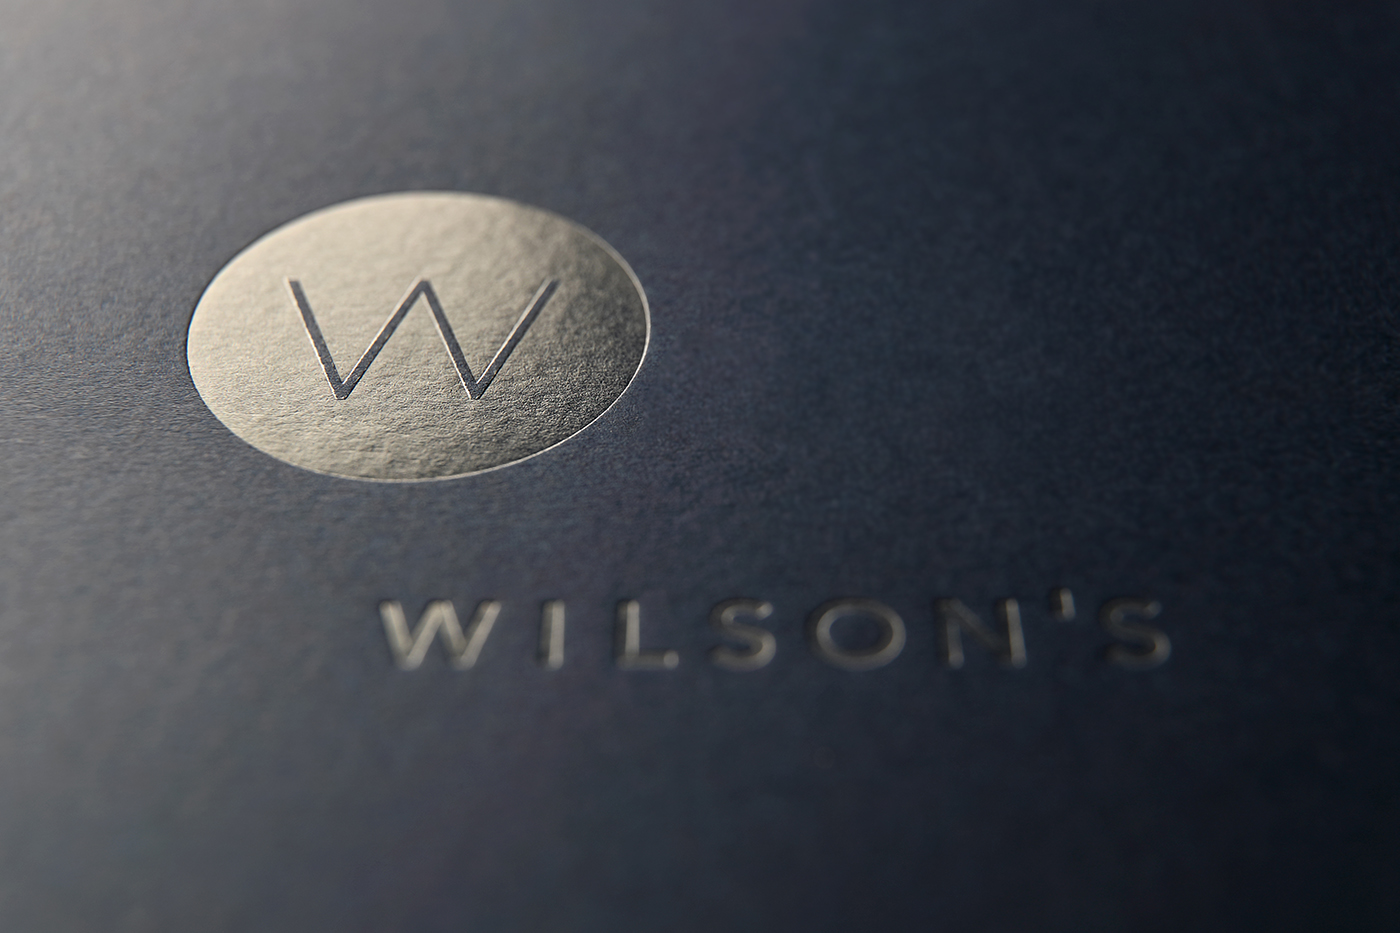 Wilson's Attorneys logo varnished onto blue folder. Design by MR.SMiTH Creative Studio.